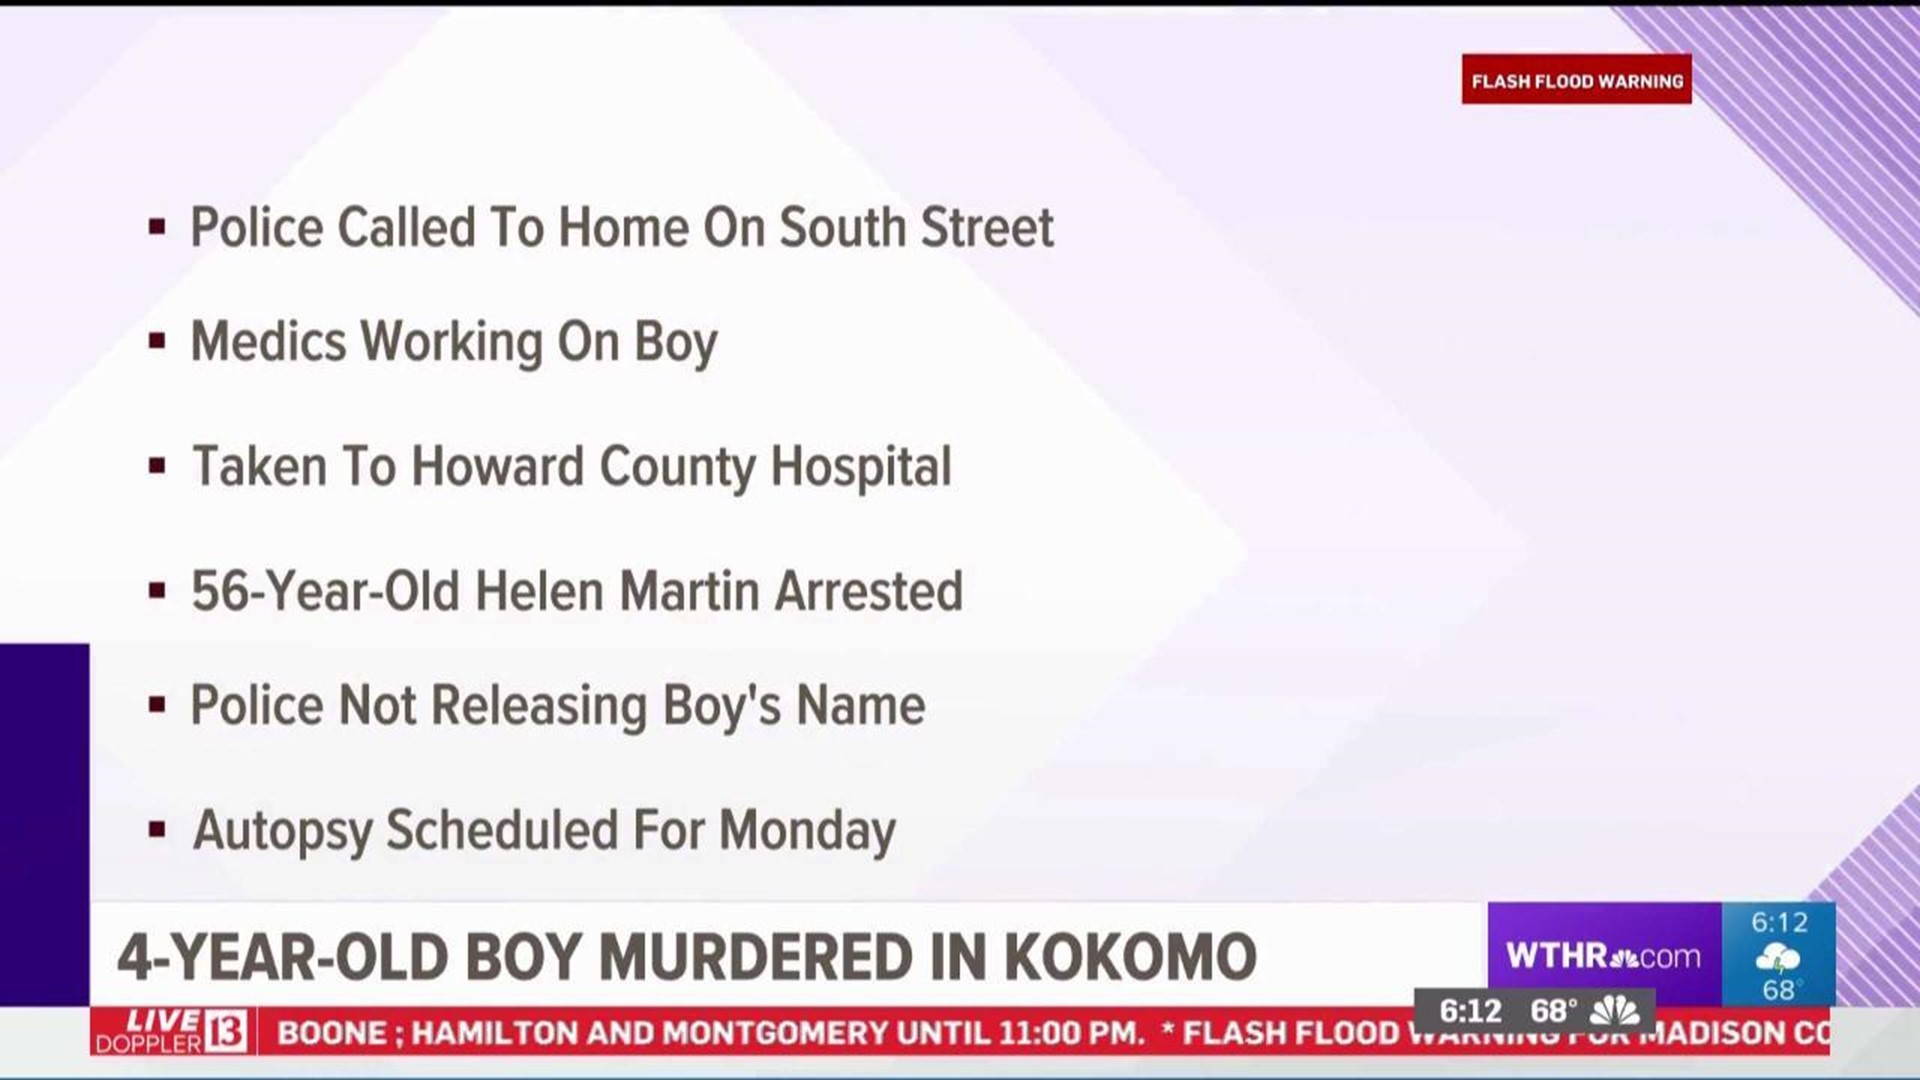 4-Year-Old Boy Murdered In Kokomo